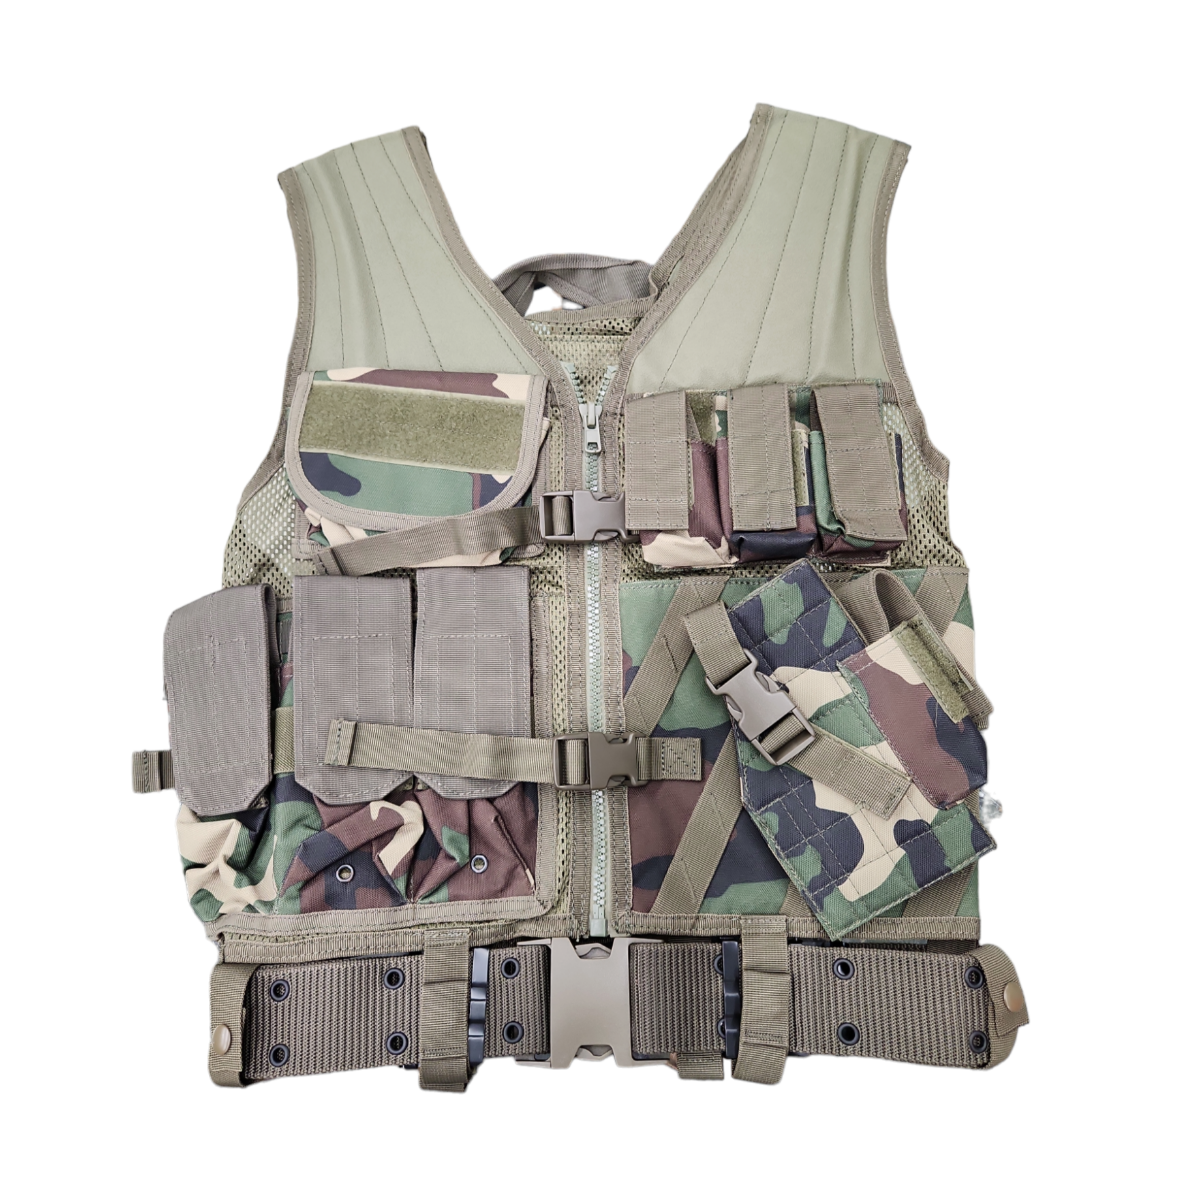 MSP-06 Entry Assault Vest